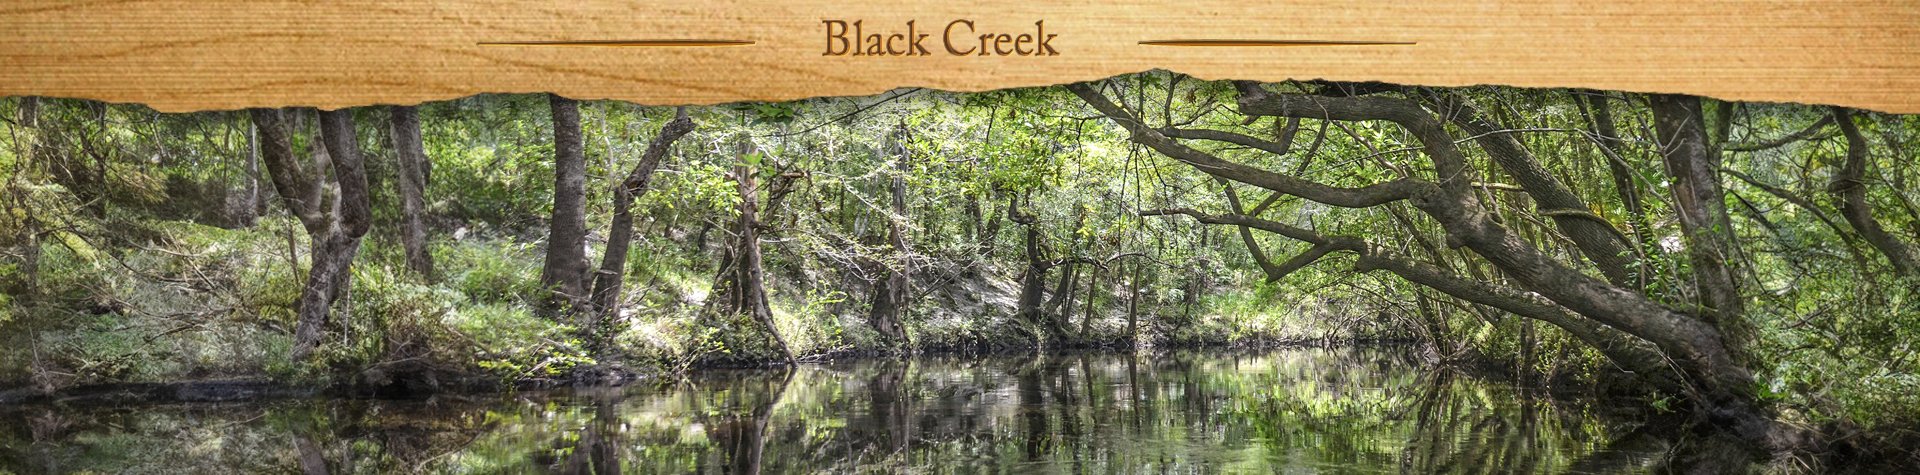 Black Creek – North Fork